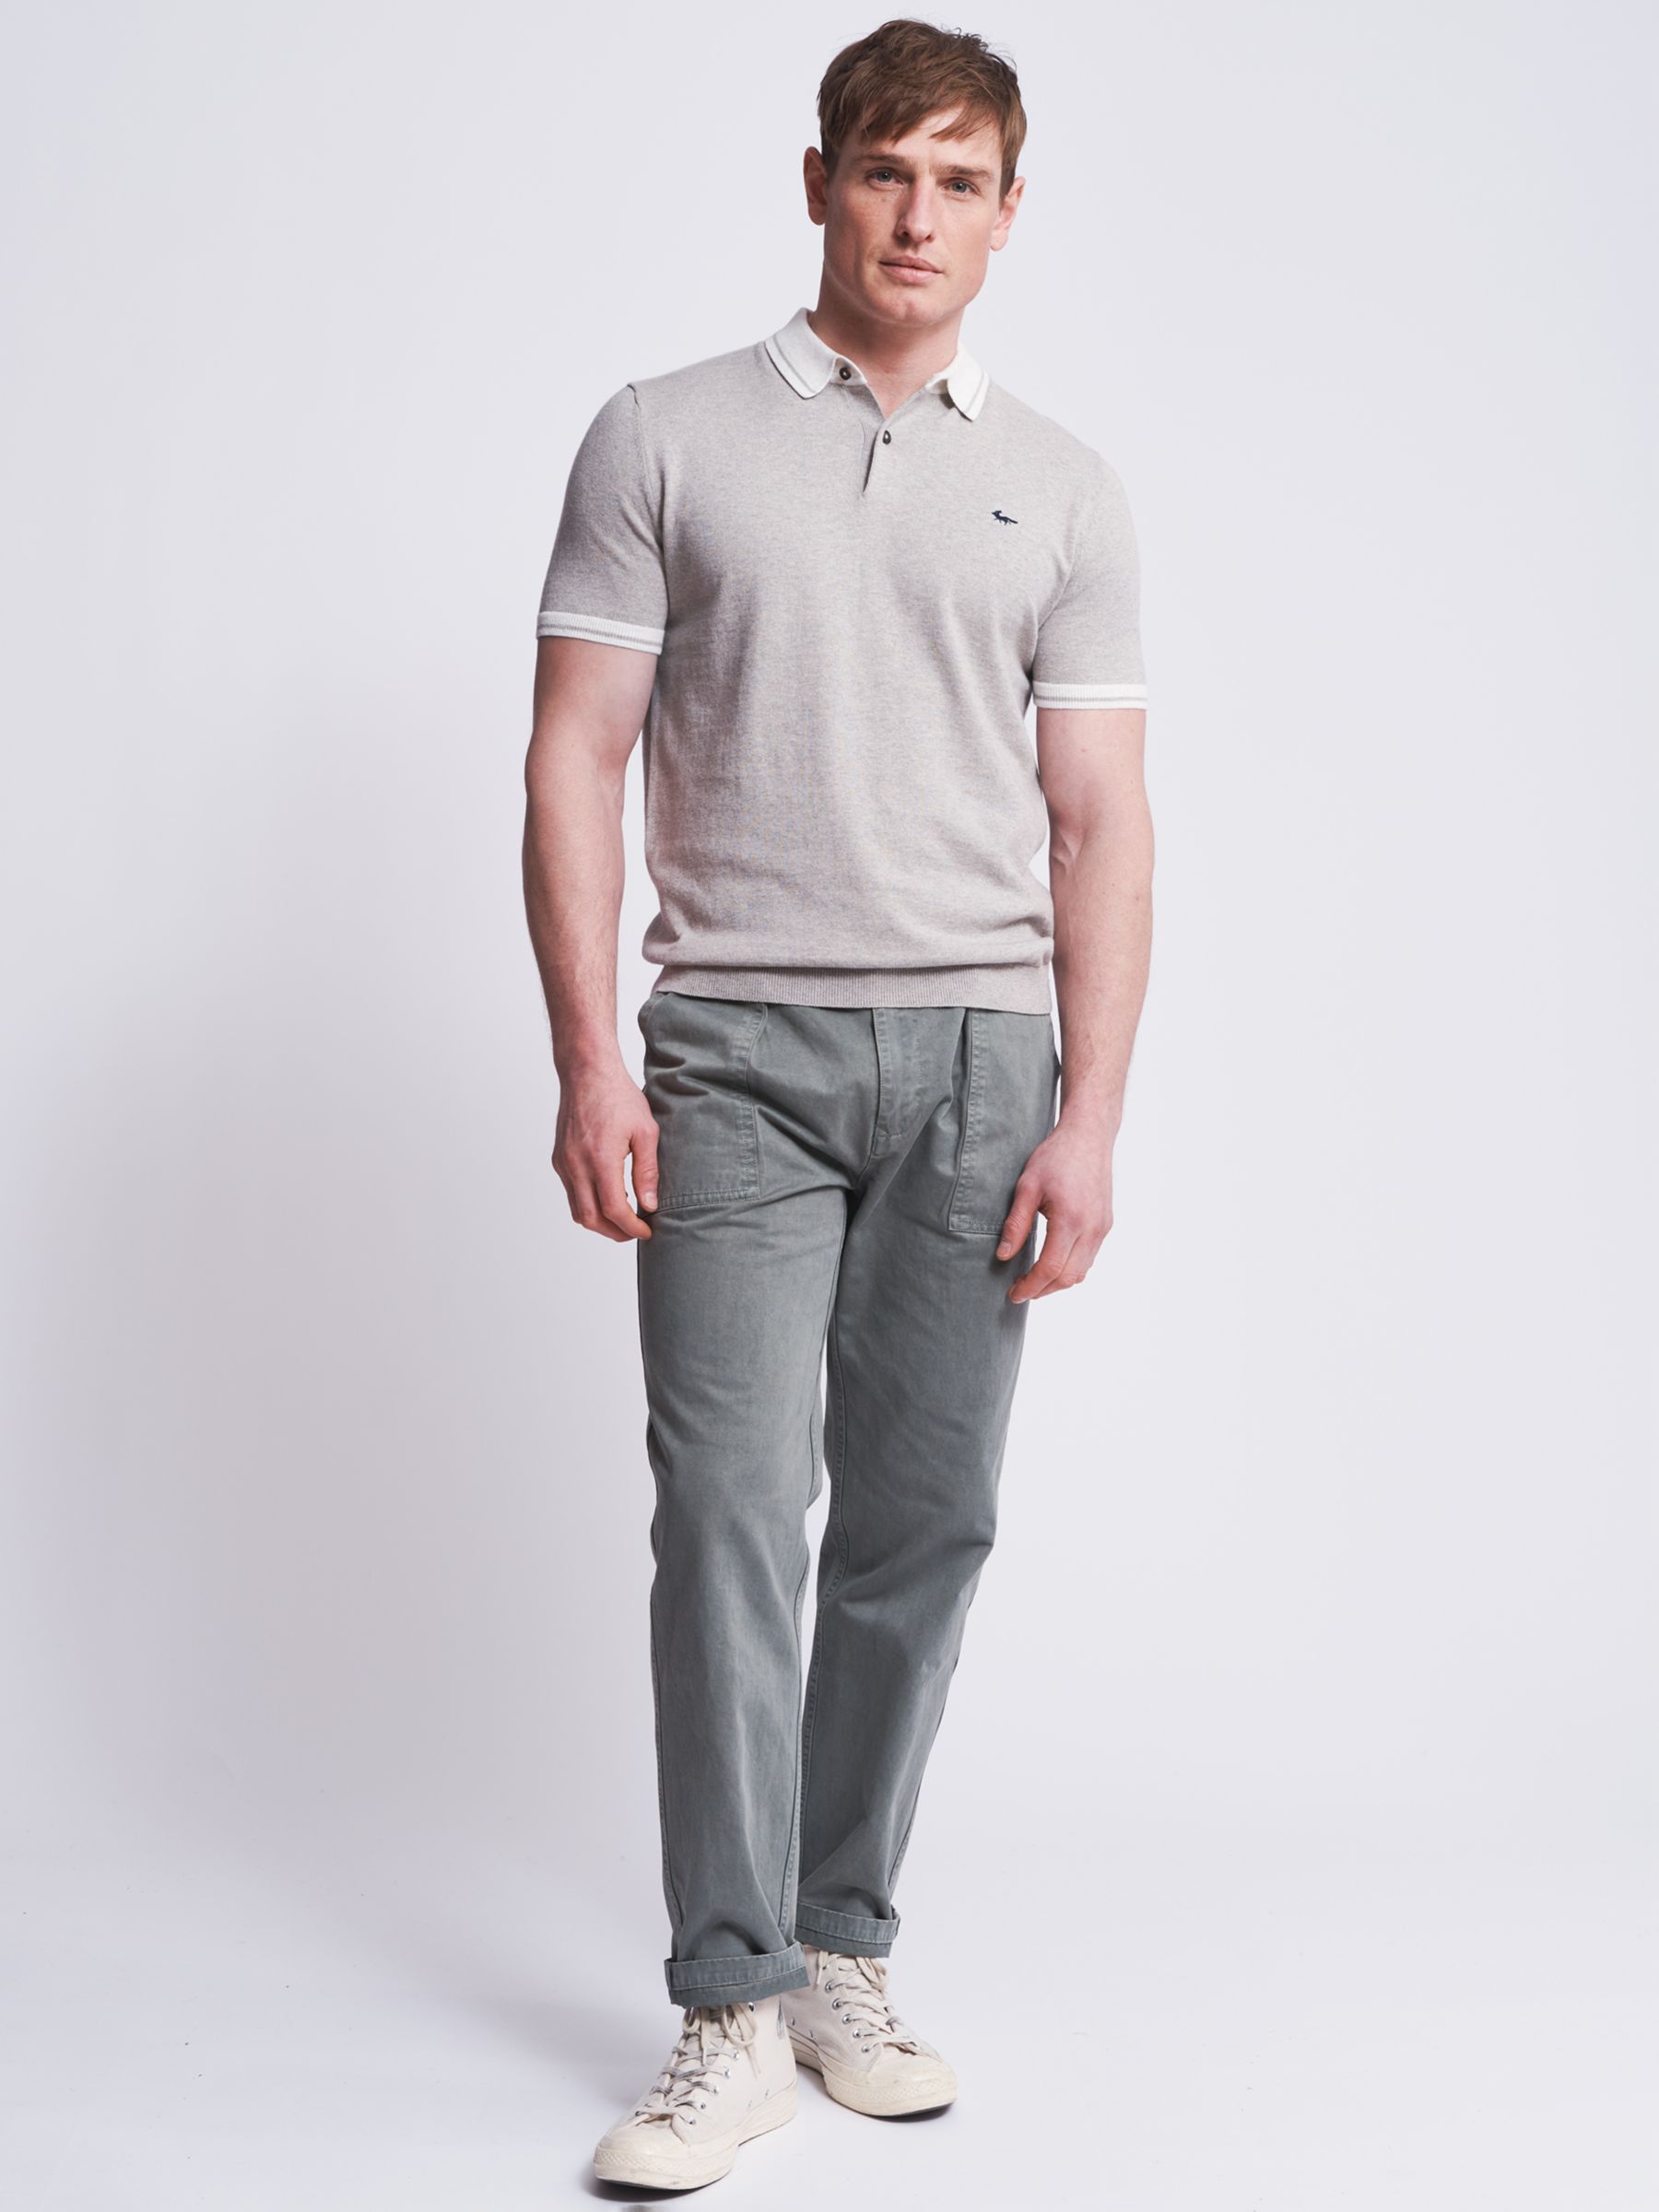 Aubin Dryden Cotton & Cashmere Knitted Short Sleeve Polo Shirt, Light Grey, S